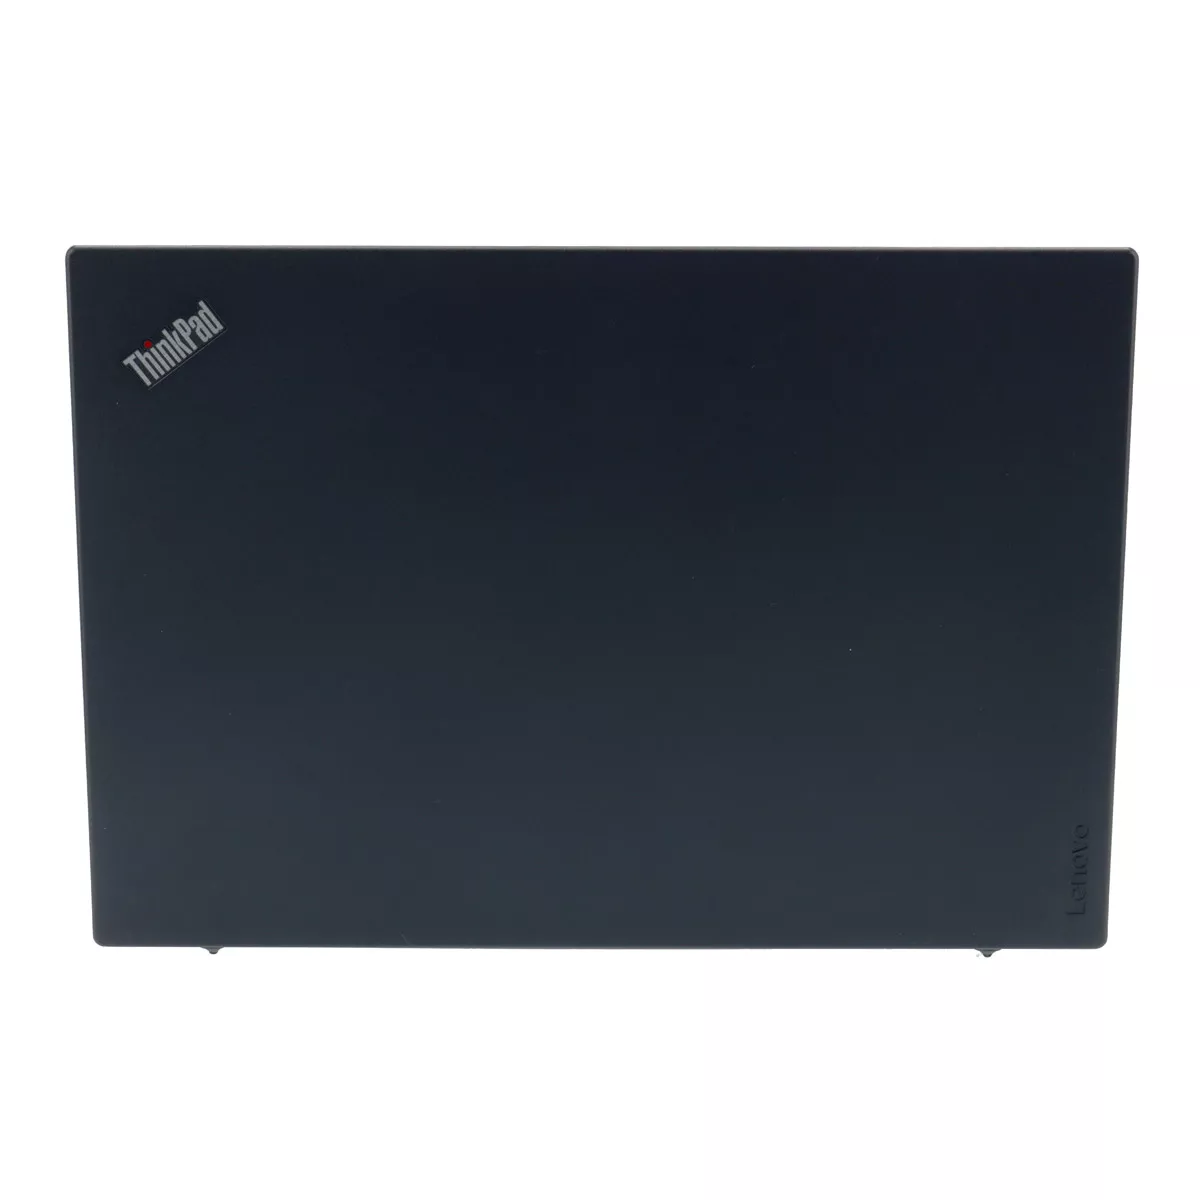 Lenovo ThinkPad L460 Core i5 6300U Full-HD 240 GB SSD Webcam B